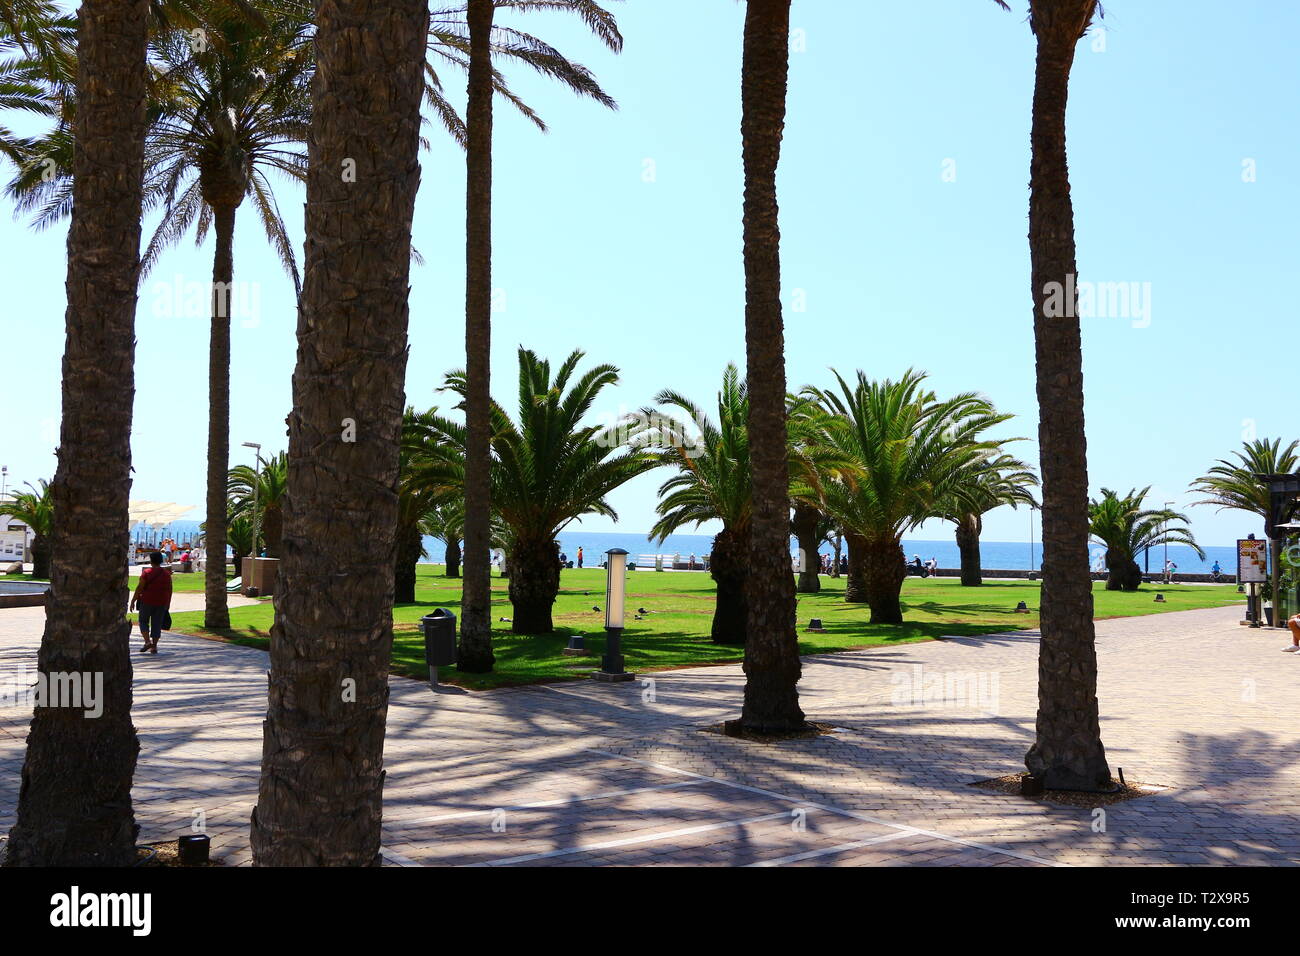 Palmen an der Strandpromenade von Maspalomas auf Gran Canaria Stock Photo